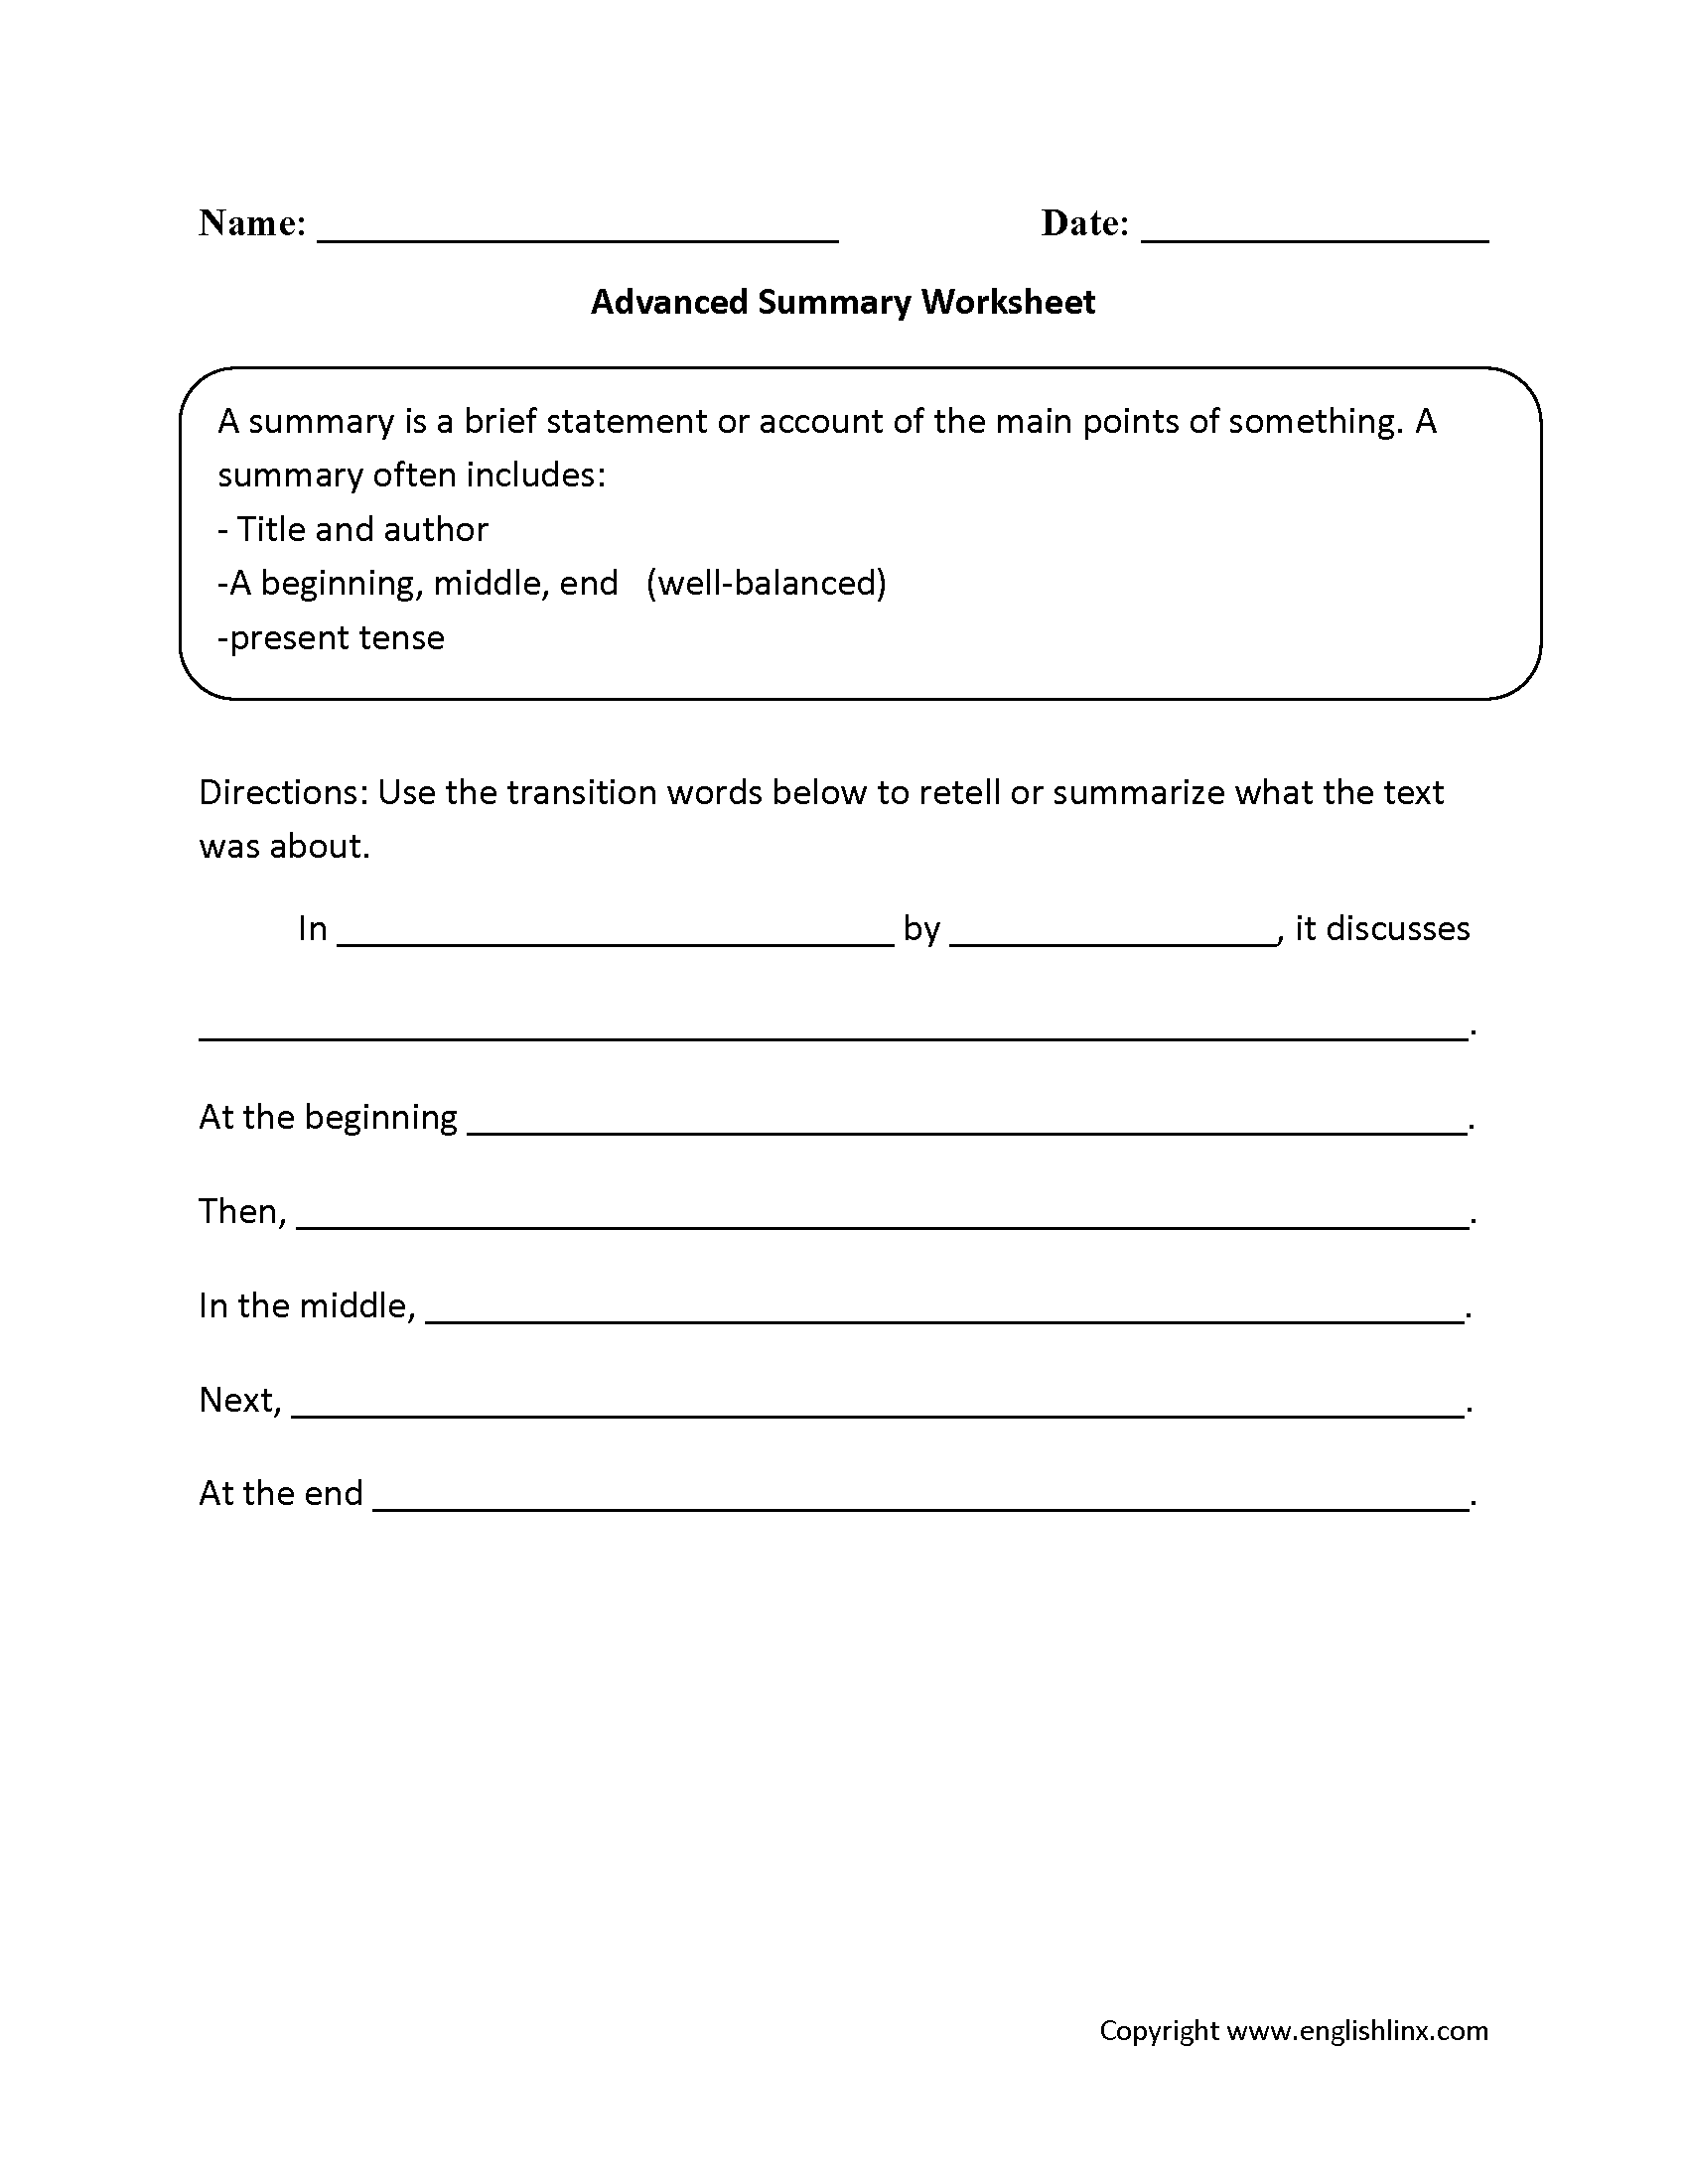 Advanced Summary Worksheet